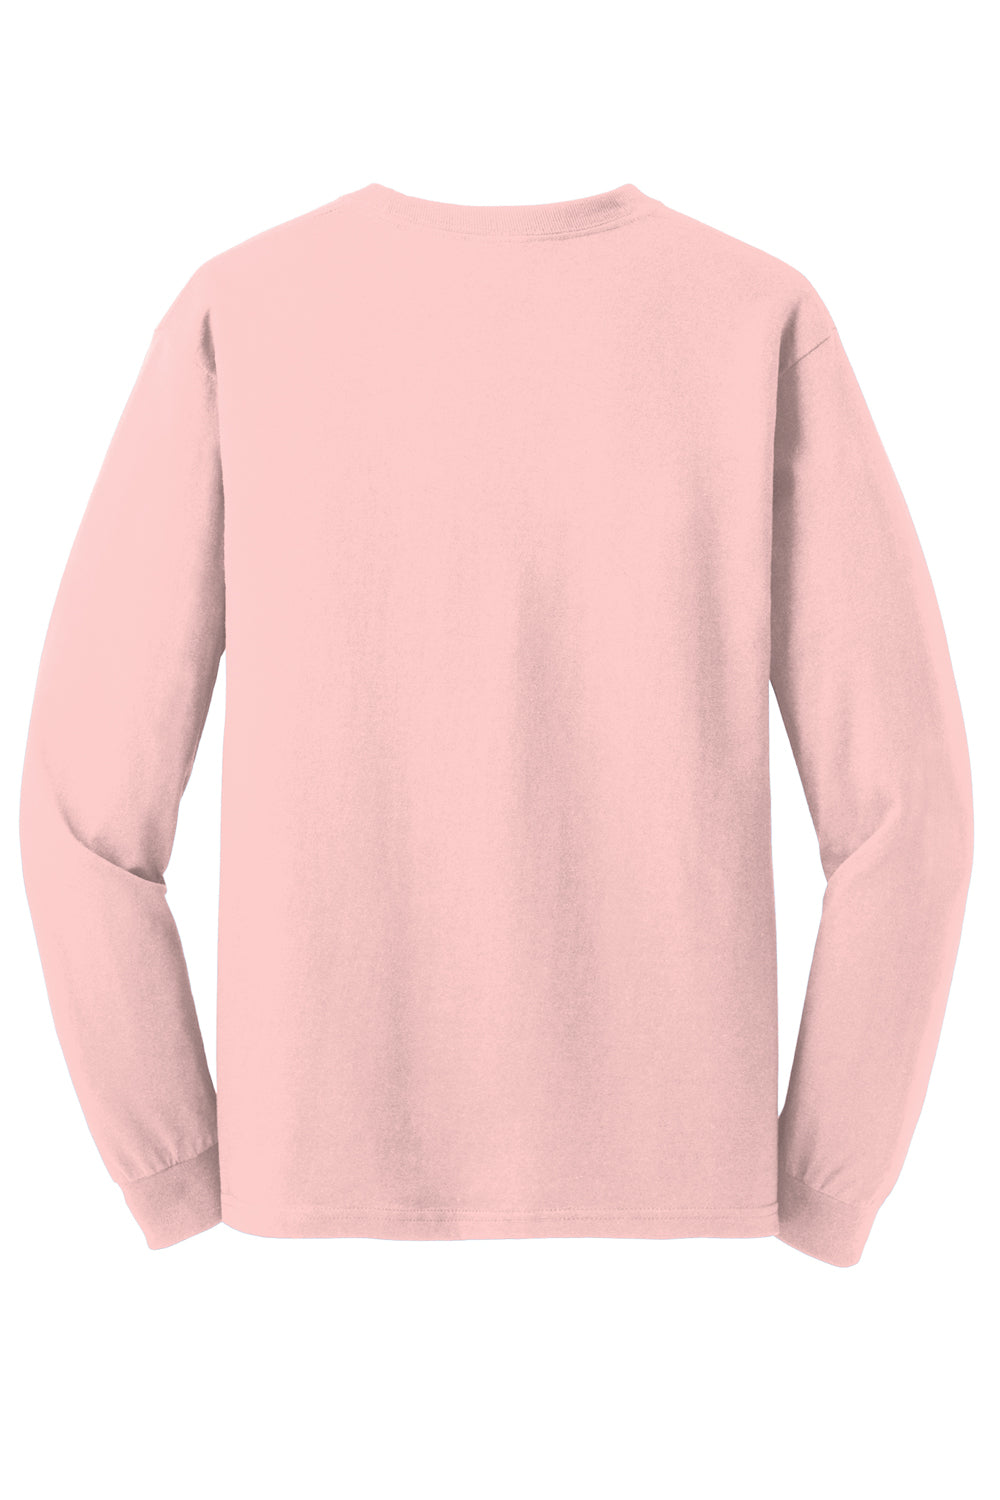 Gildan Mens Long Sleeve Crewneck T-Shirt Light Pink Flat Back